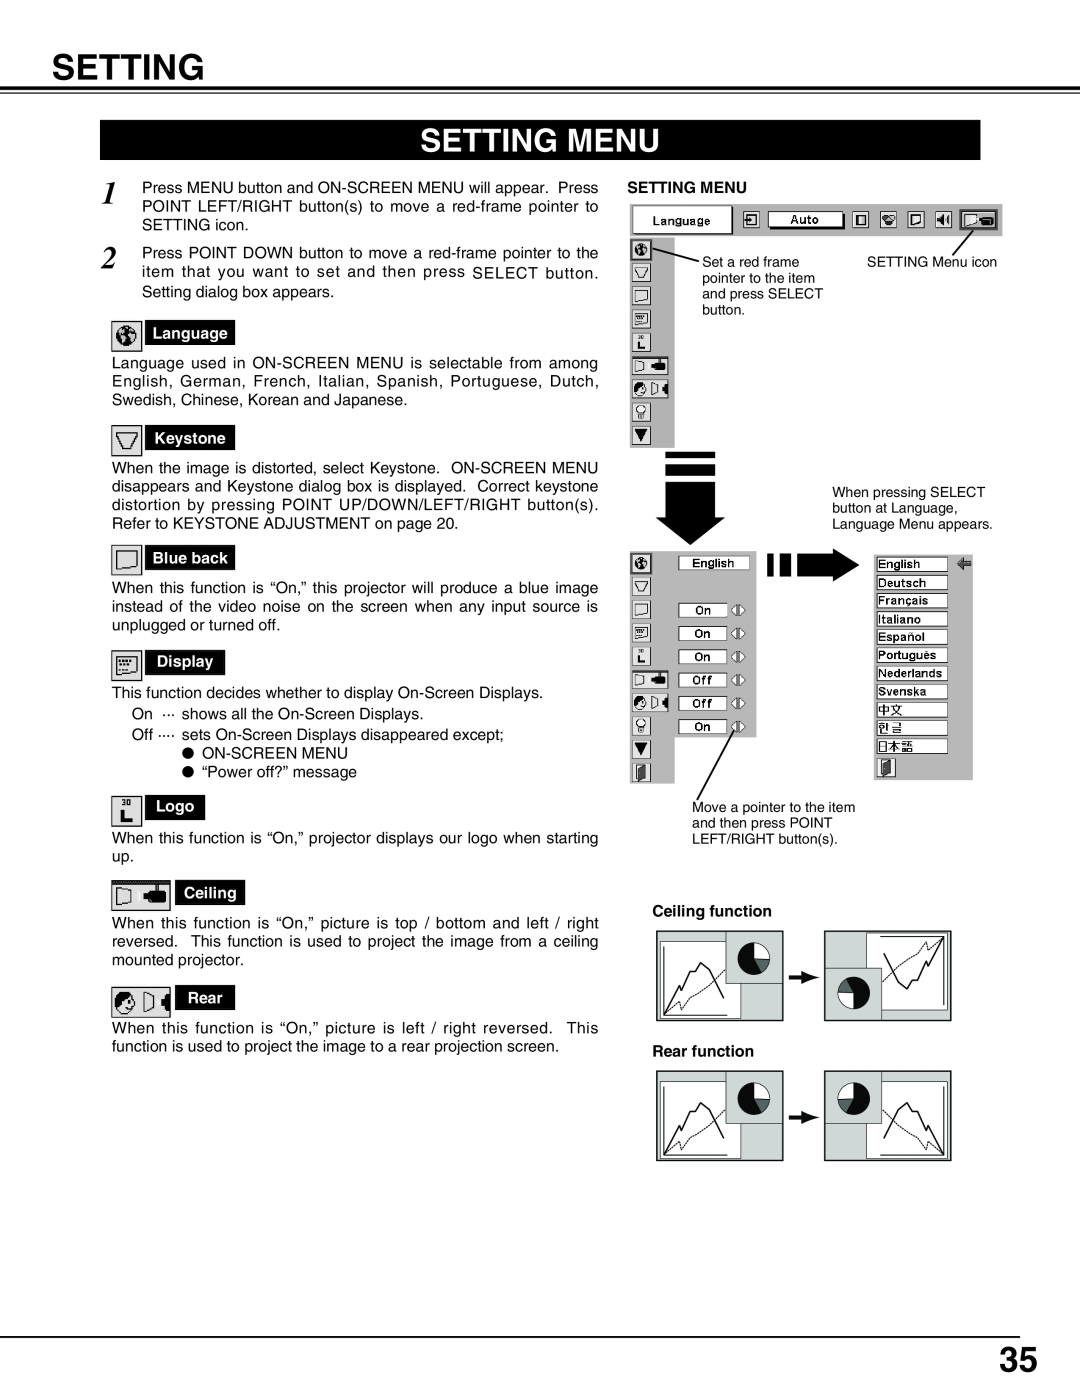 BOXLIGHT cp-305t manual Setting Menu, Language, Keystone, Blue back, Display, Logo, Ceiling, Rear 